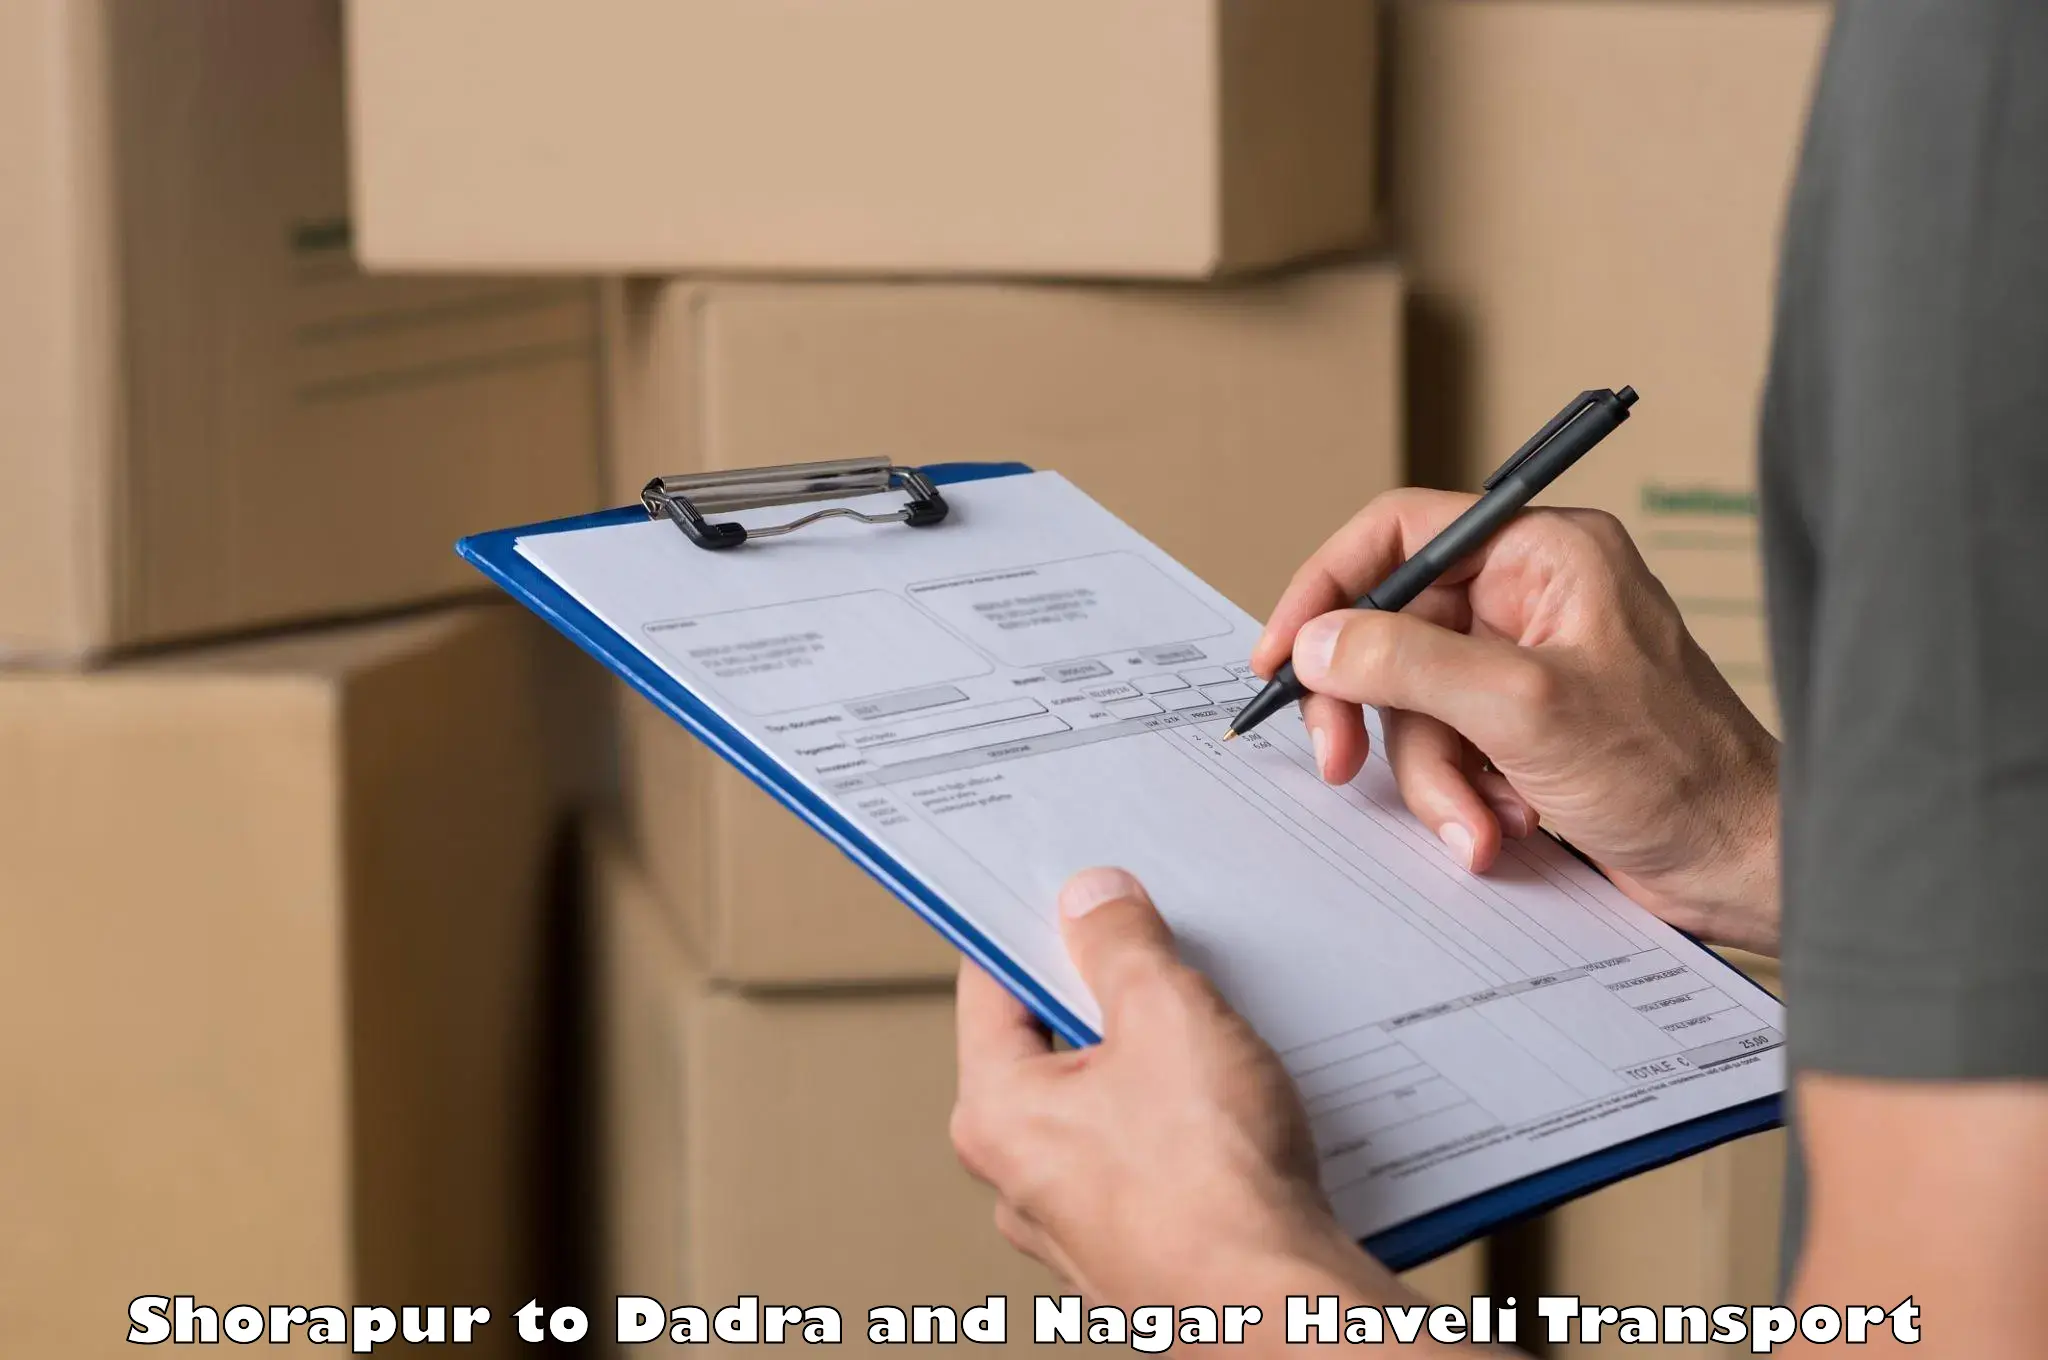 Truck transport companies in India Shorapur to Dadra and Nagar Haveli